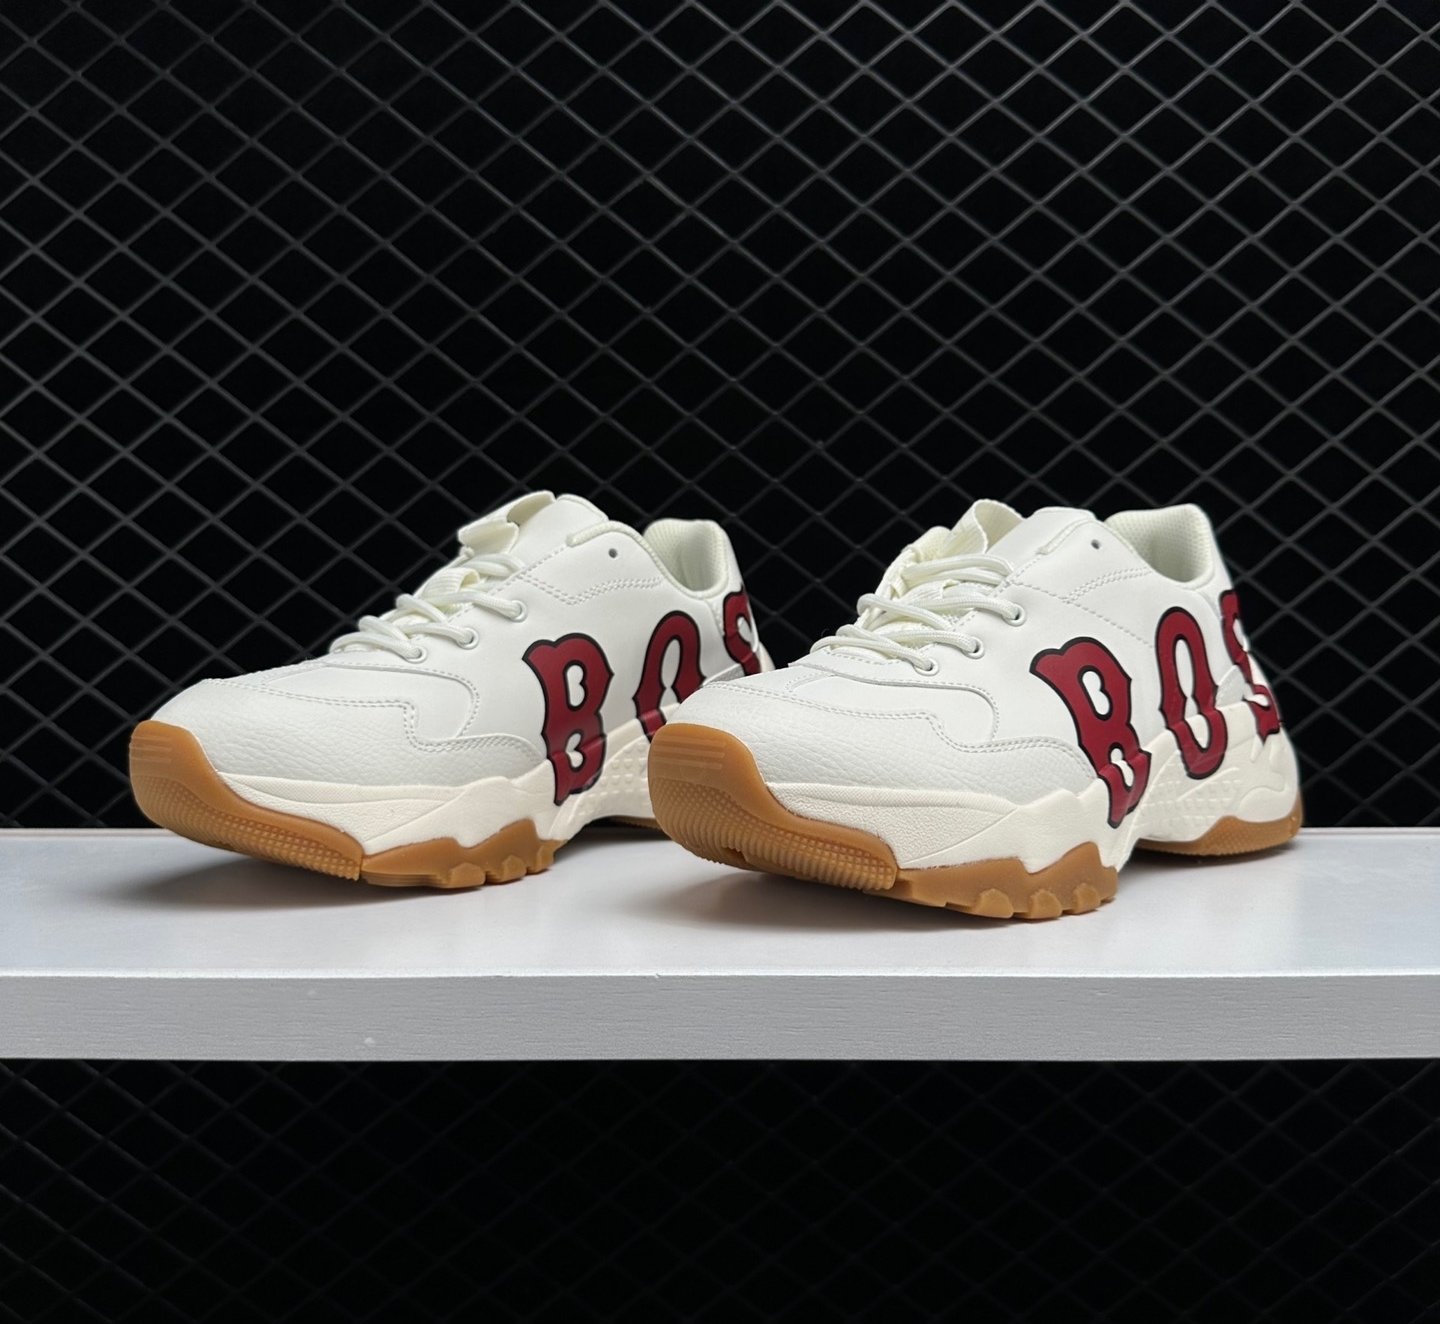 MLB KOREA Bigball Chunky P NY Sneakers Shoes - White Red 3ASHC2B2N-43RDS